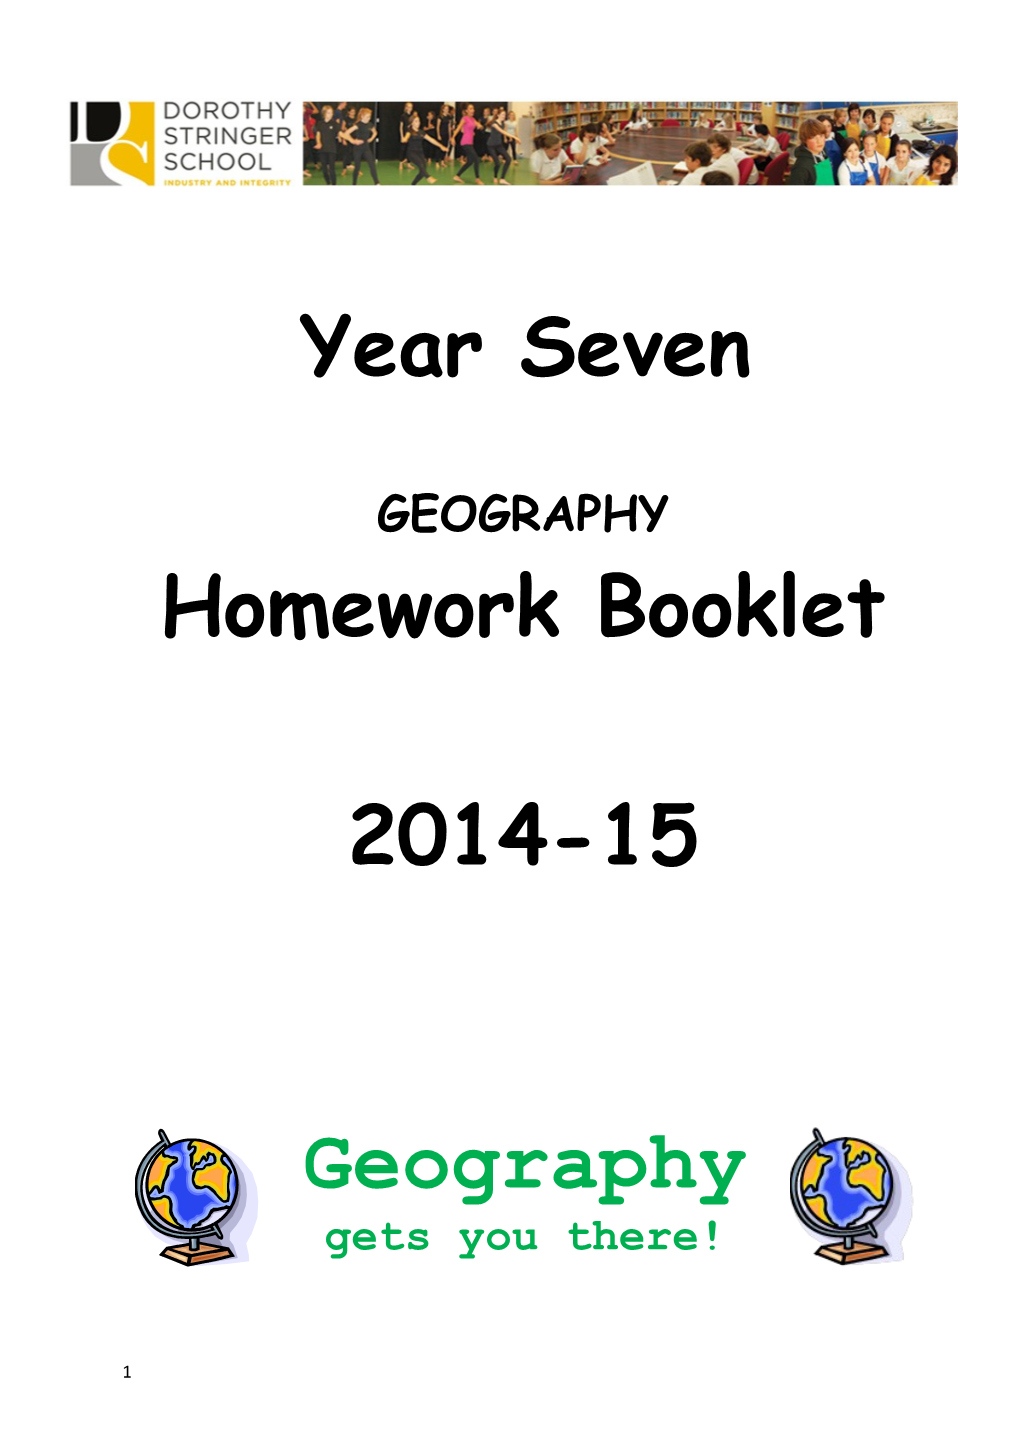 Homework Booklet